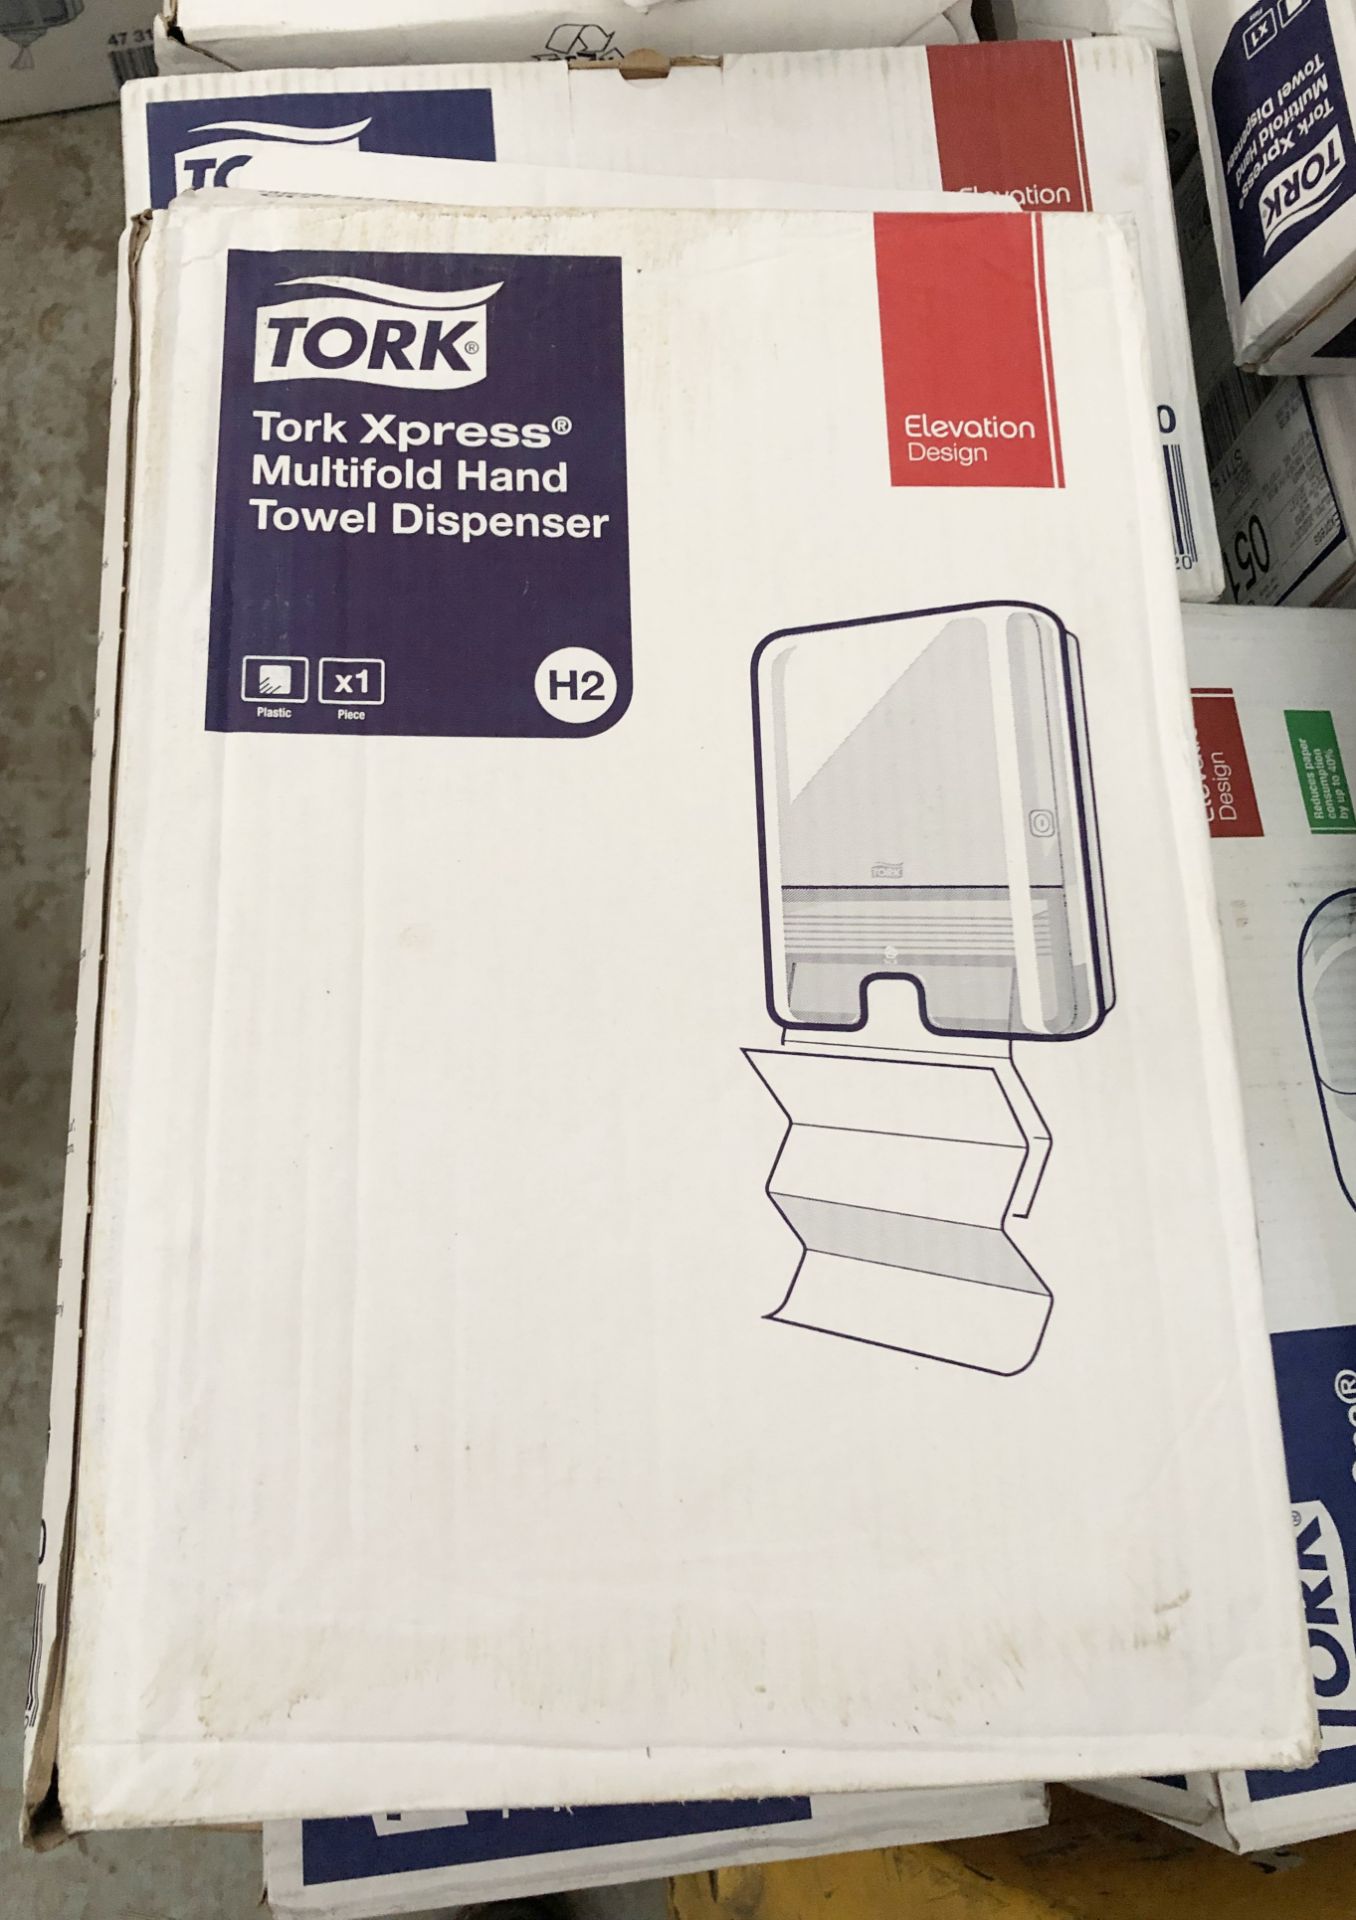 4 x TORK Multifold Hand Towel Dispenser - Ref: 55 20 00 - CL329 - Total RRP £213.32 - Image 3 of 3